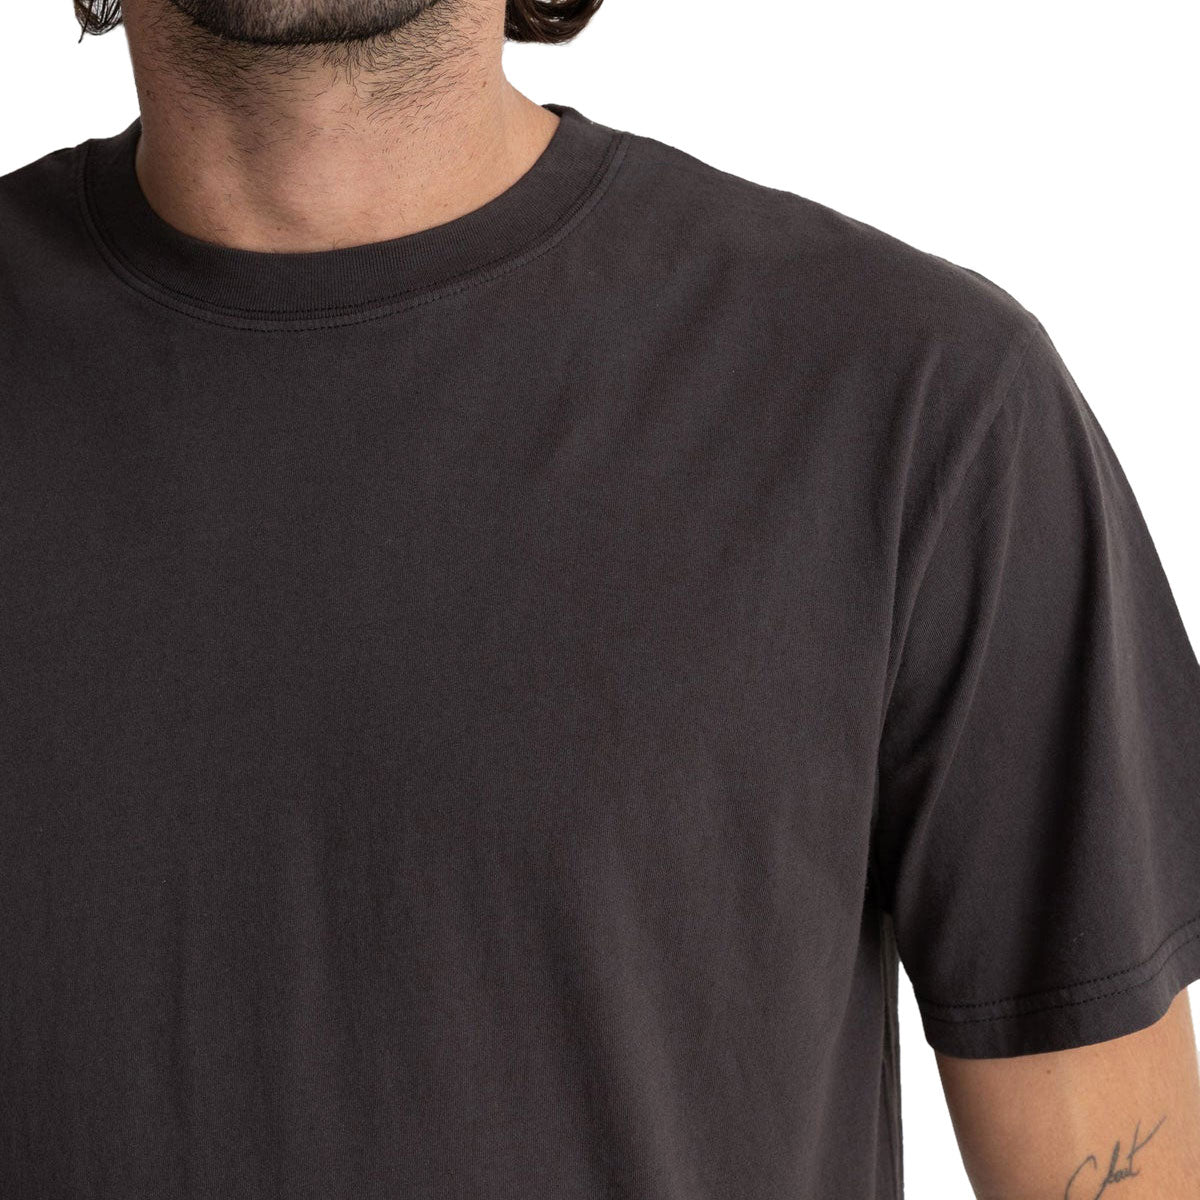 Rhythm Classic Brand T-Shirt - Vintage Black image 4